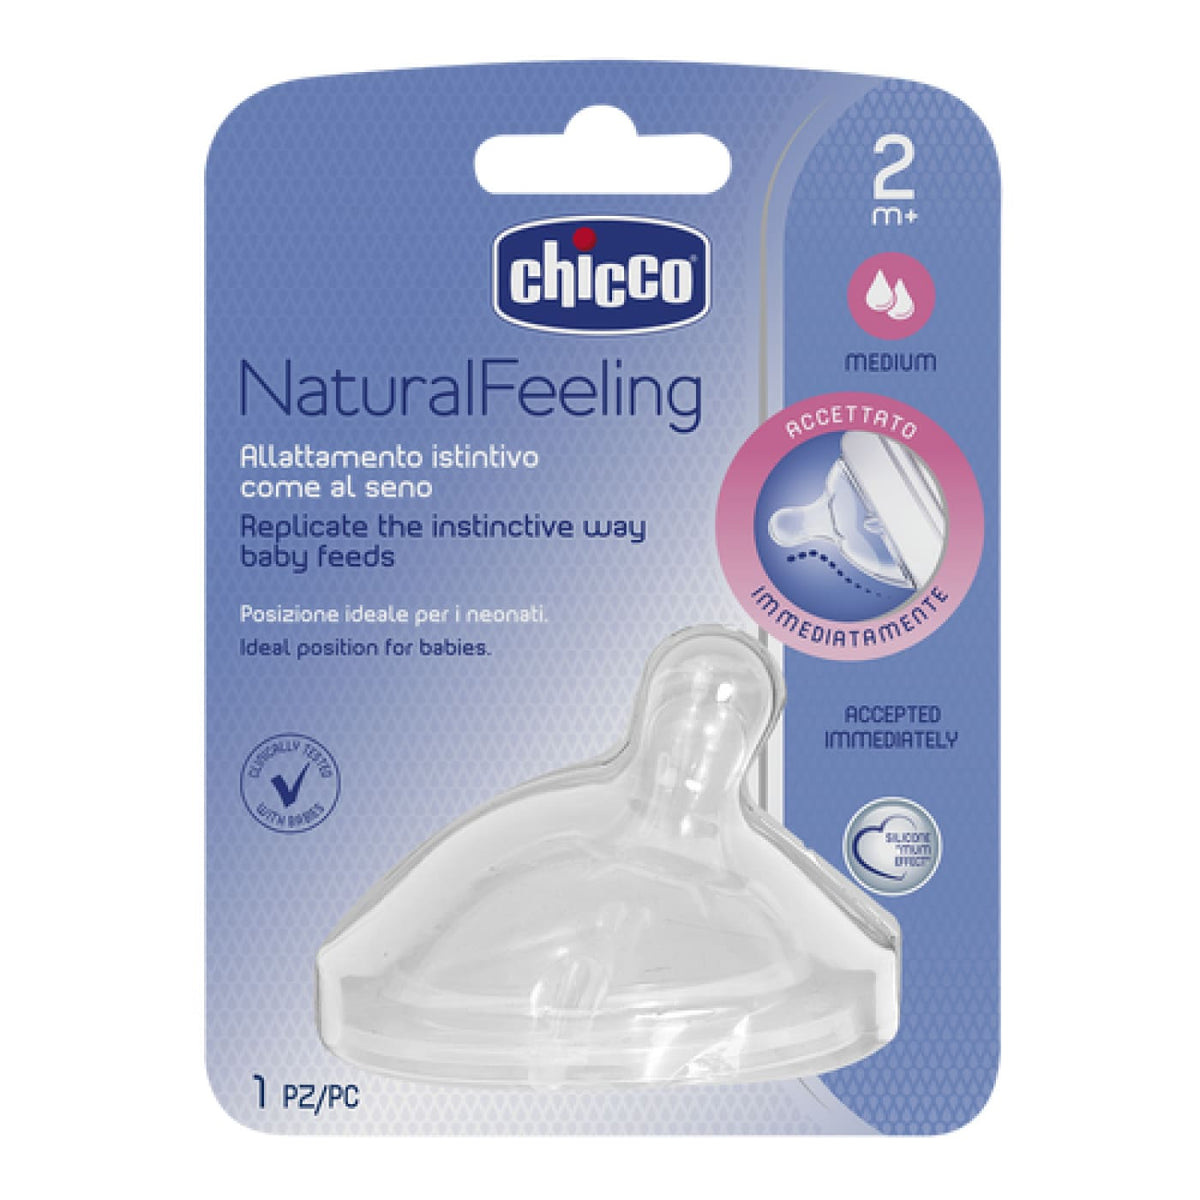 Chicco Natural Feeling Silicone Teat 2M+ - Medium Flow - NURSING &amp; FEEDING - BOTTLE ACCESSORIES